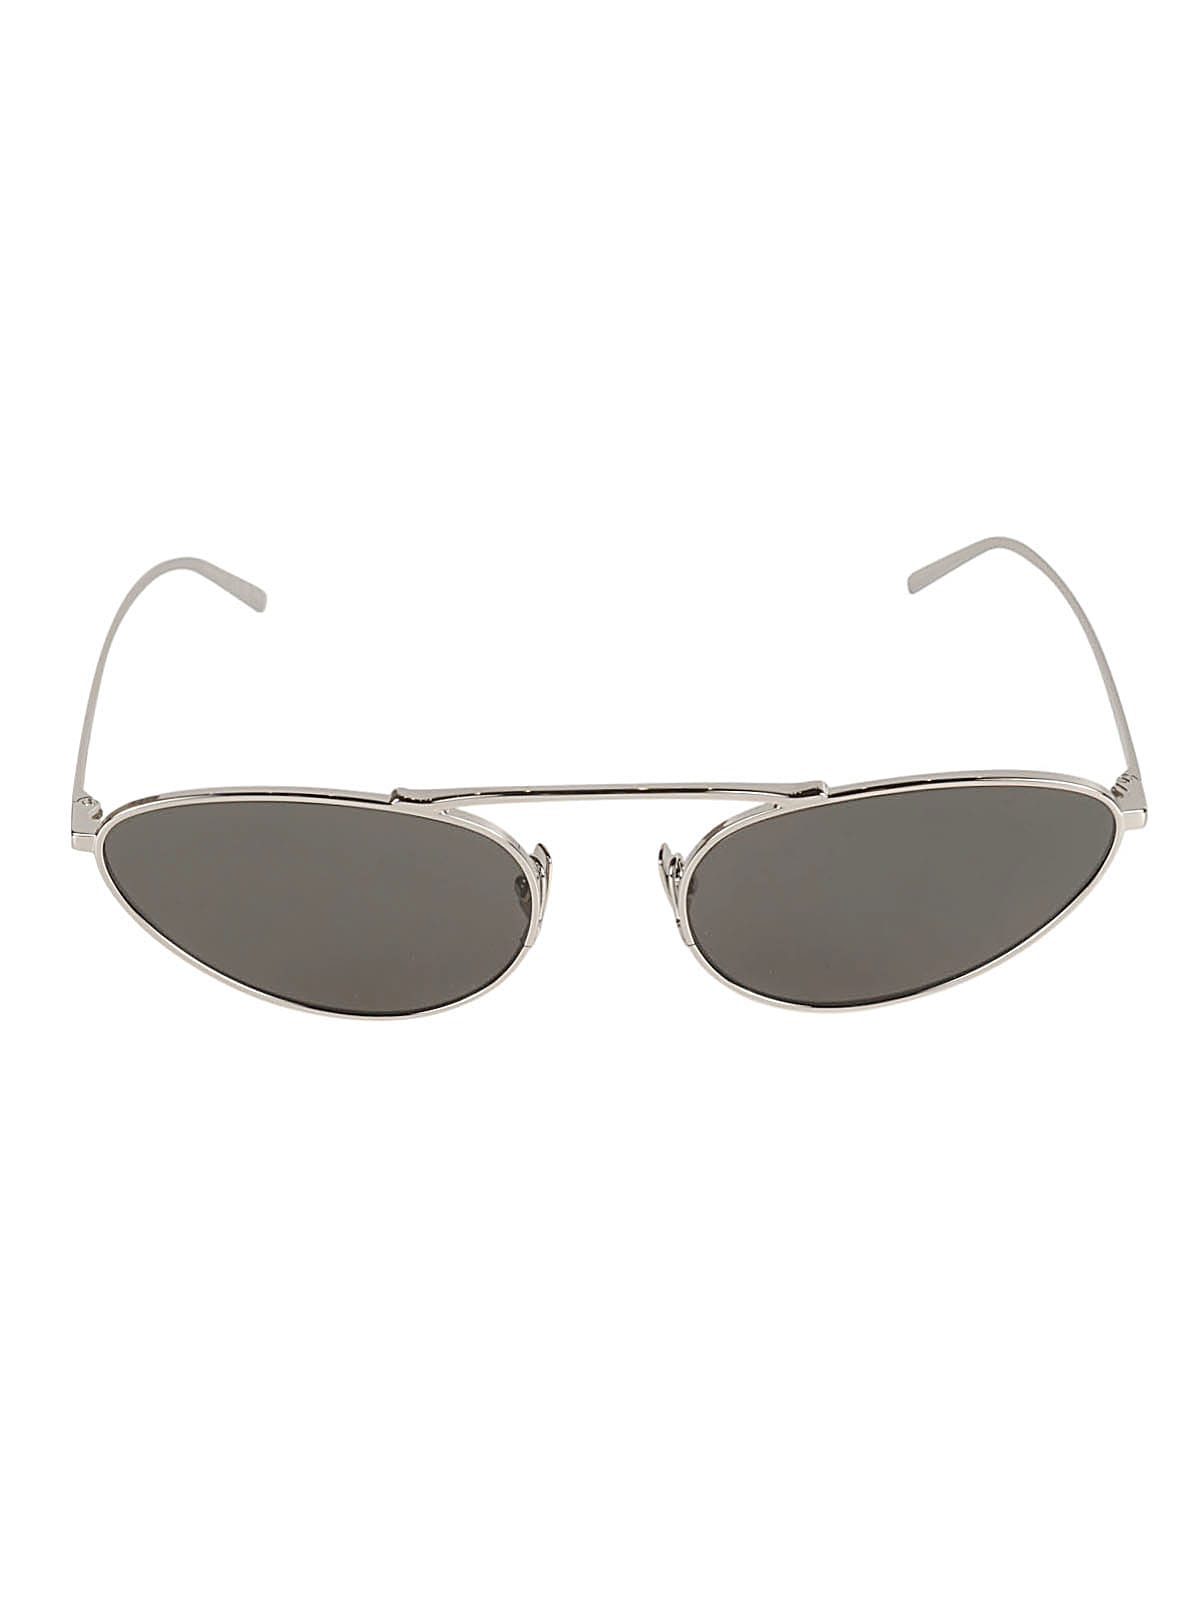 SAINT LAURENT – SLIM OVAL SUNGLASSES /GREY – la boutique eyewear